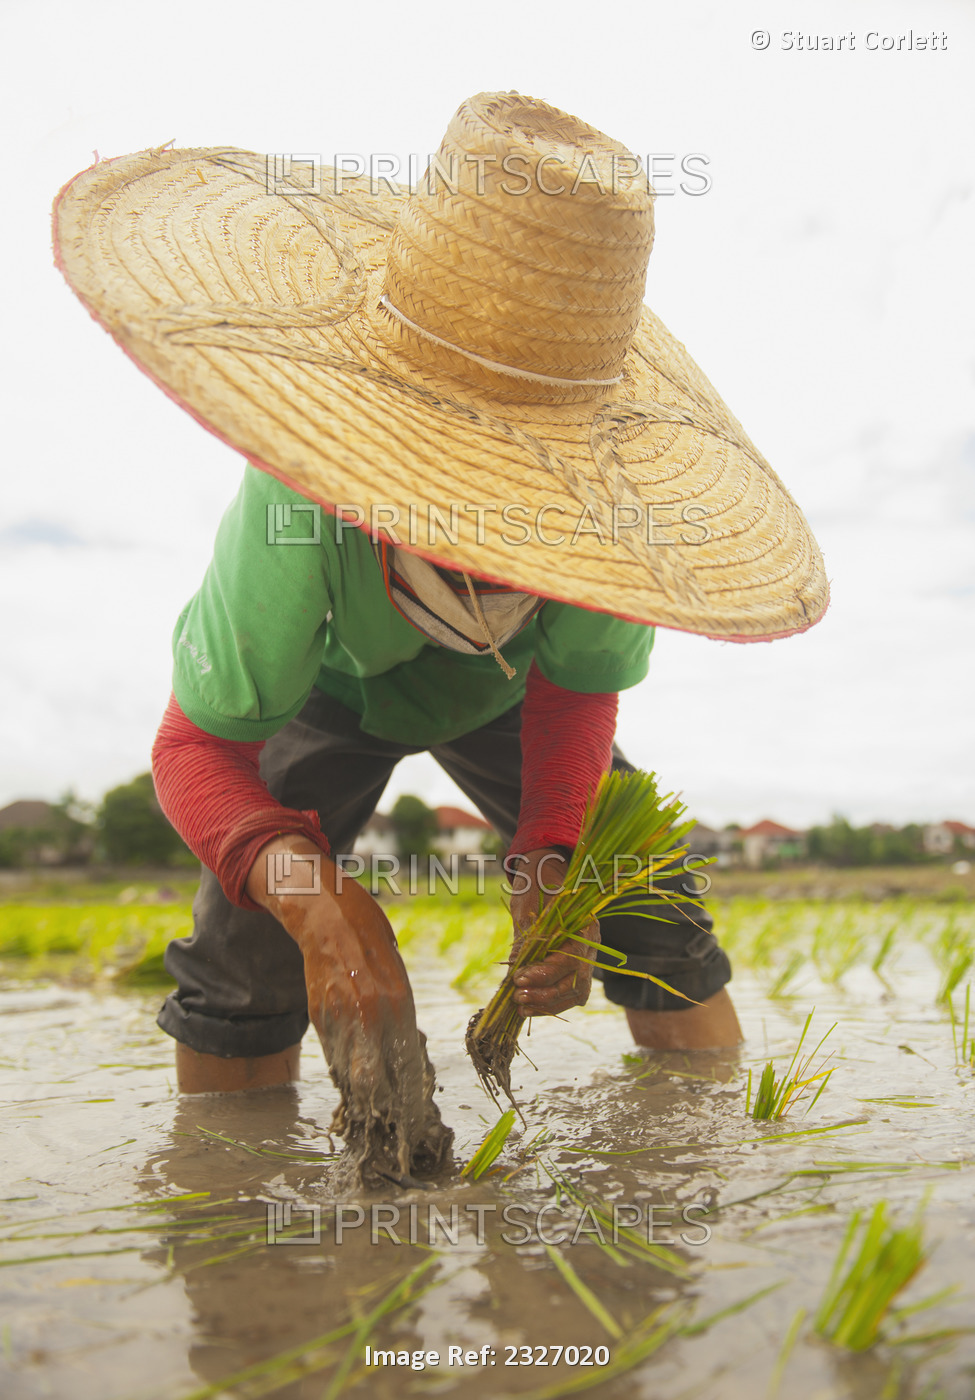 Planting new rice;Chiang mai thailand